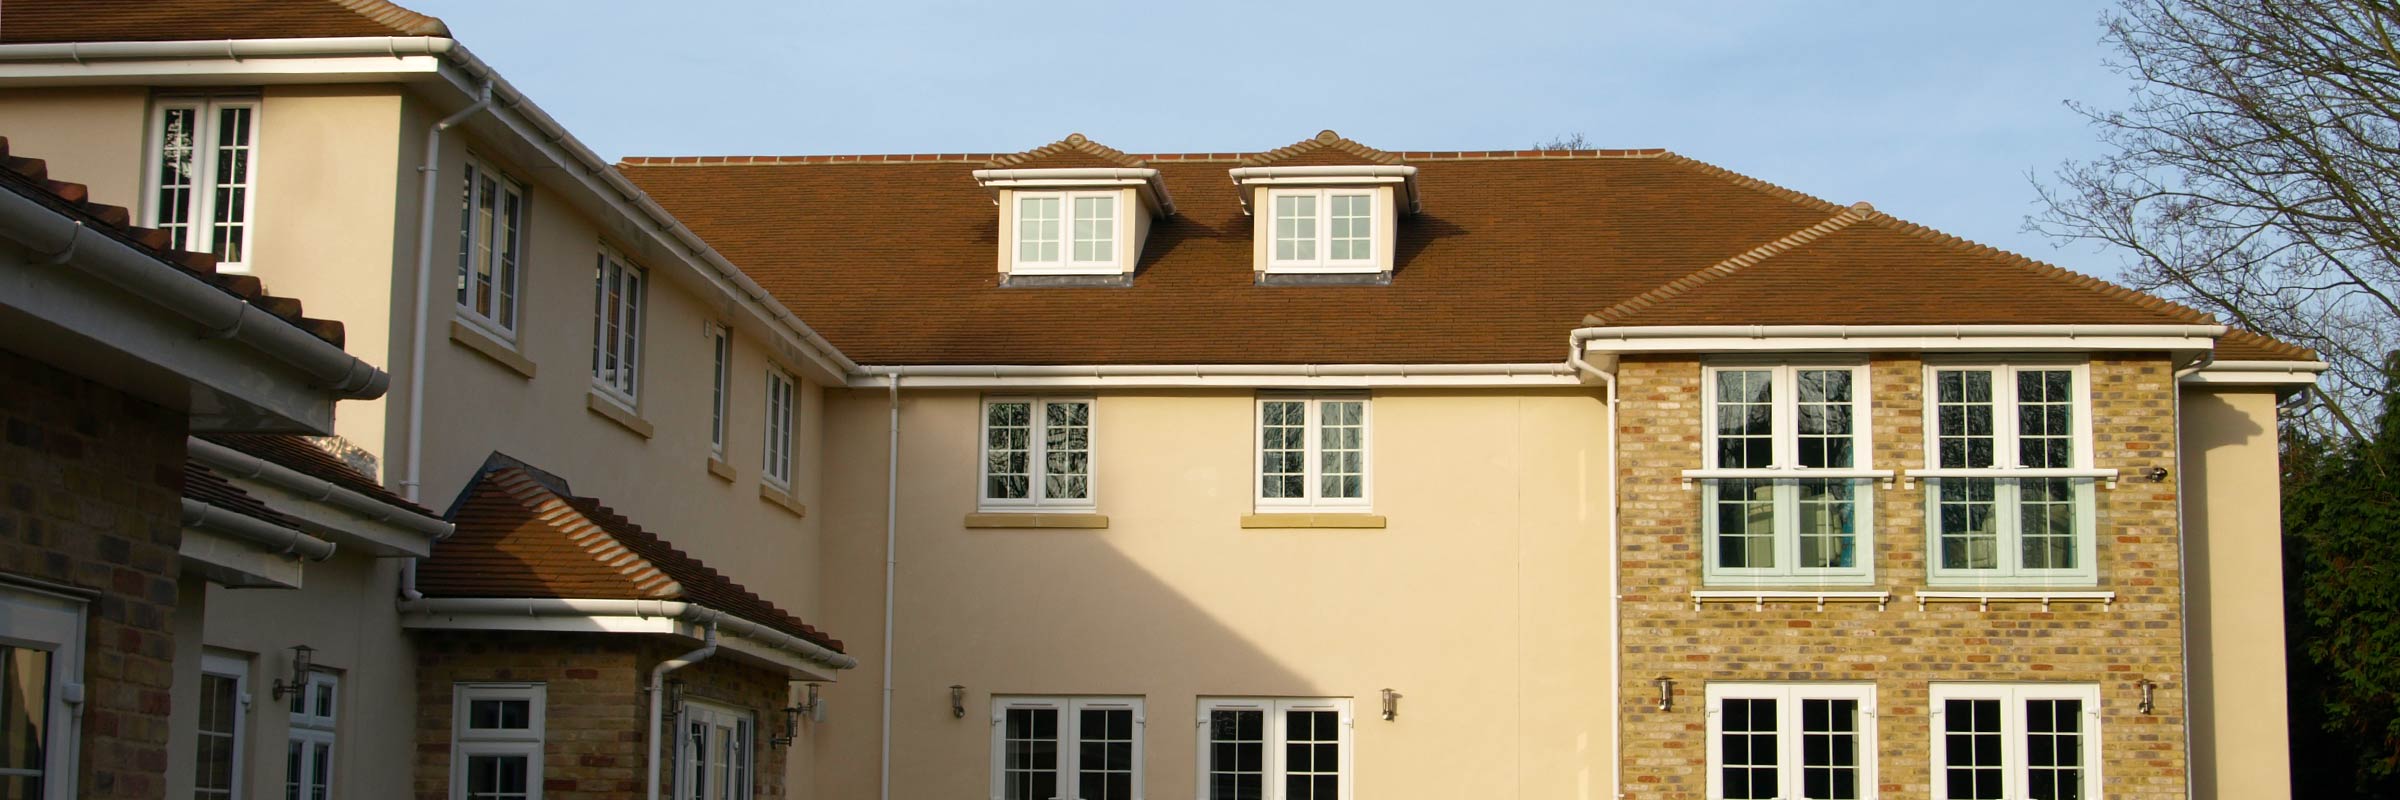 Paul Nunn Roofing Ltd-Roofing Services-Roof Repairs-Bury St Edmunds-Ipswich-Newmarket-Cambridge-Suffolk-Cambridgeshire